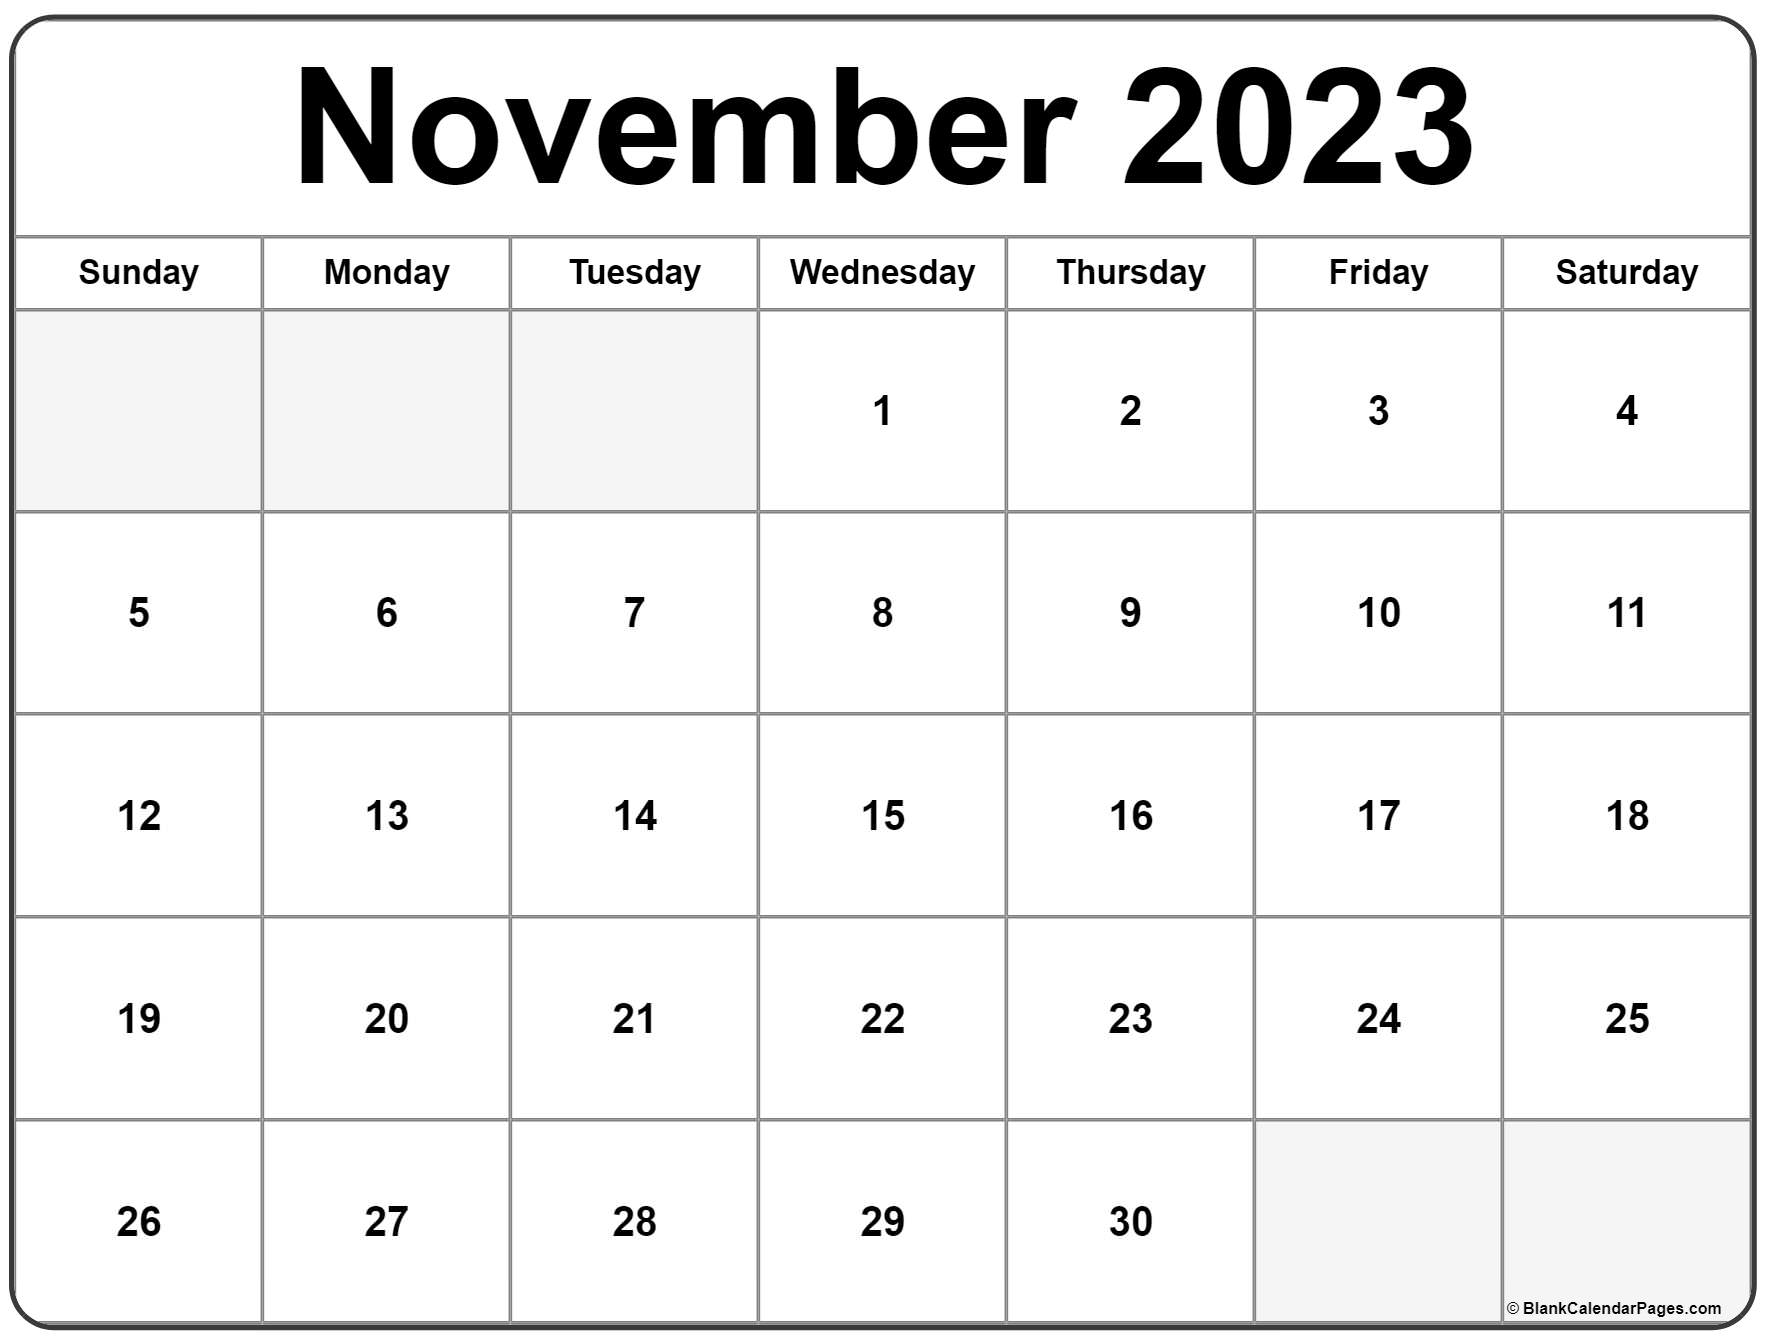 November 2023 calendar free printable calendar